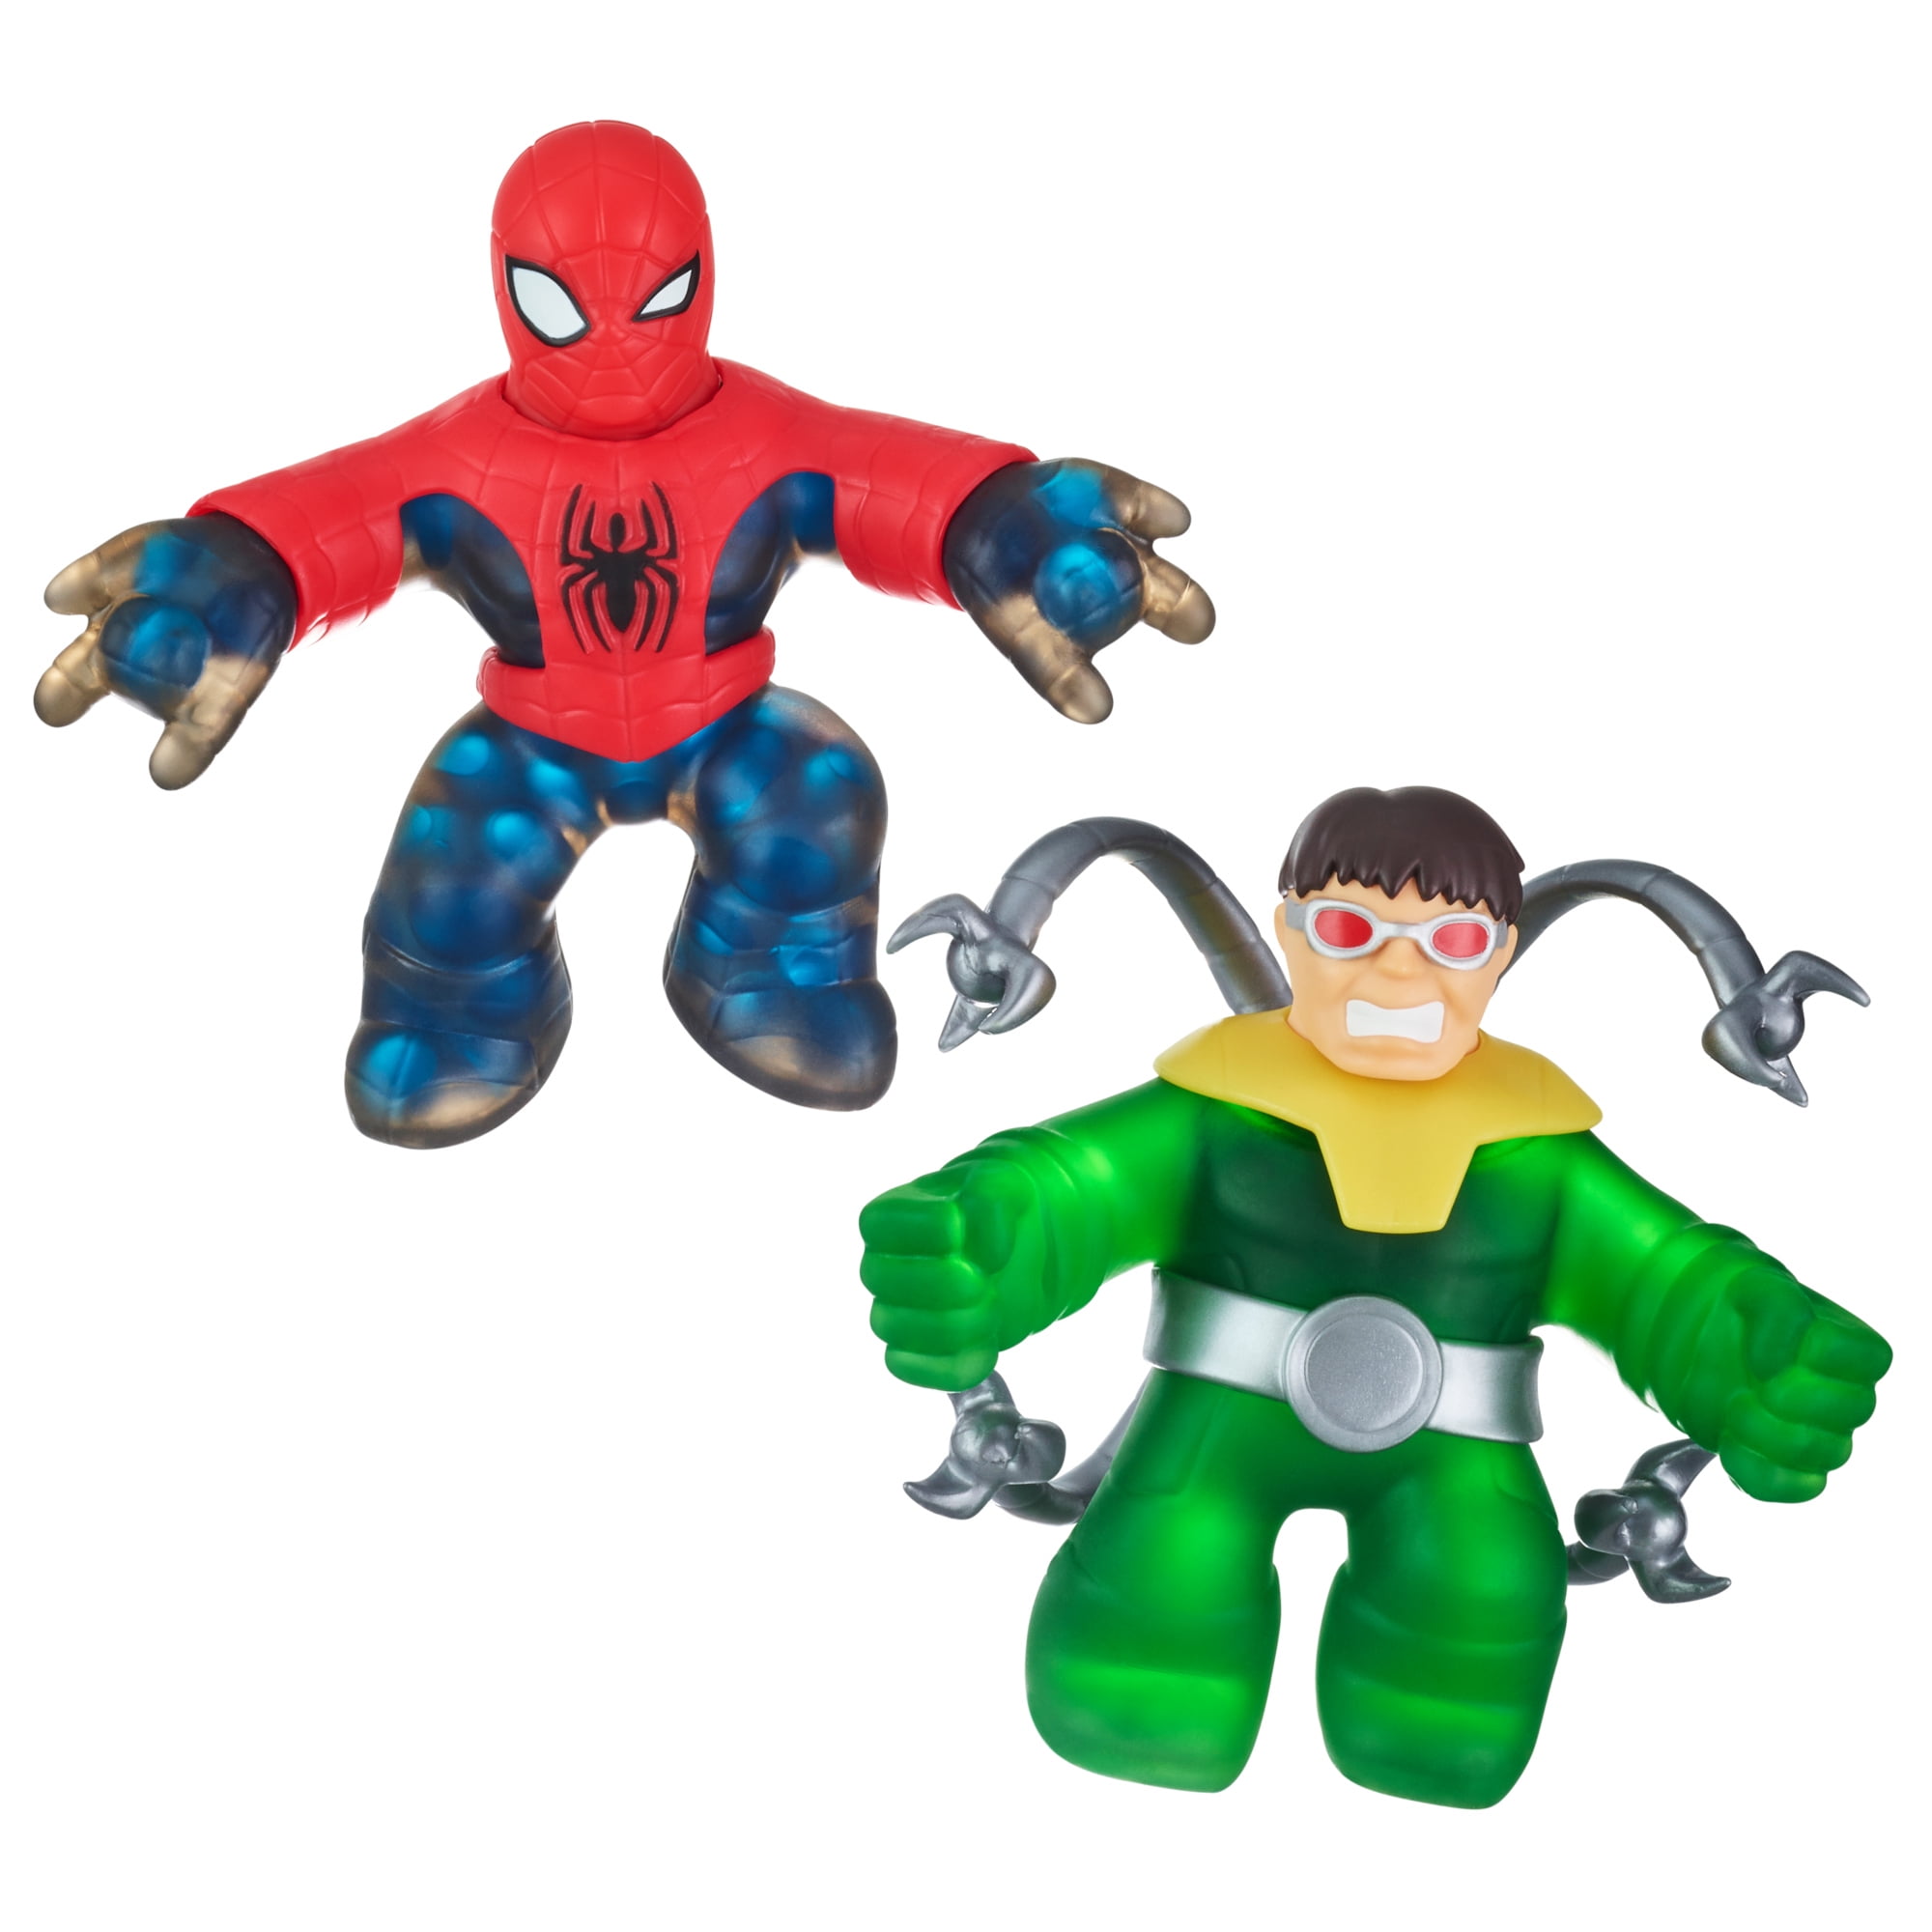 Heroes Of Goo Jit Zu Marvel Versus Pack - 2 Exclusive Marvel Heroes 4.5" Tall Action Figures, Ultimate Spider-Man Versus Doctor Octopus, Boys, Ages 4+